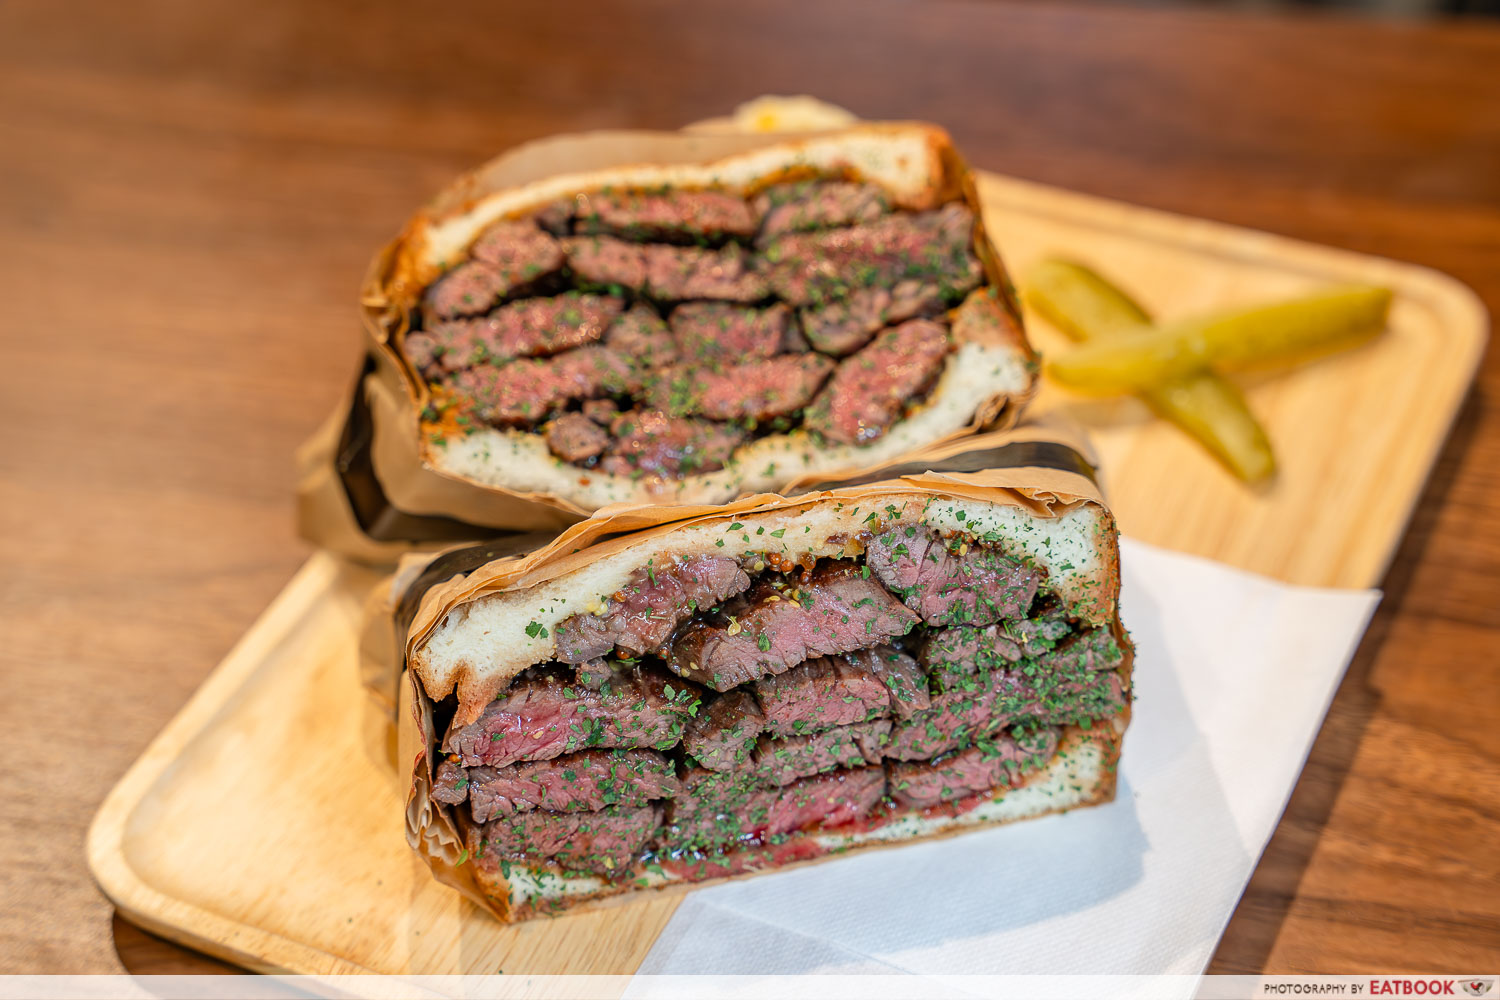 tokyo food guide - stabler meatsand beef sandwich closeup